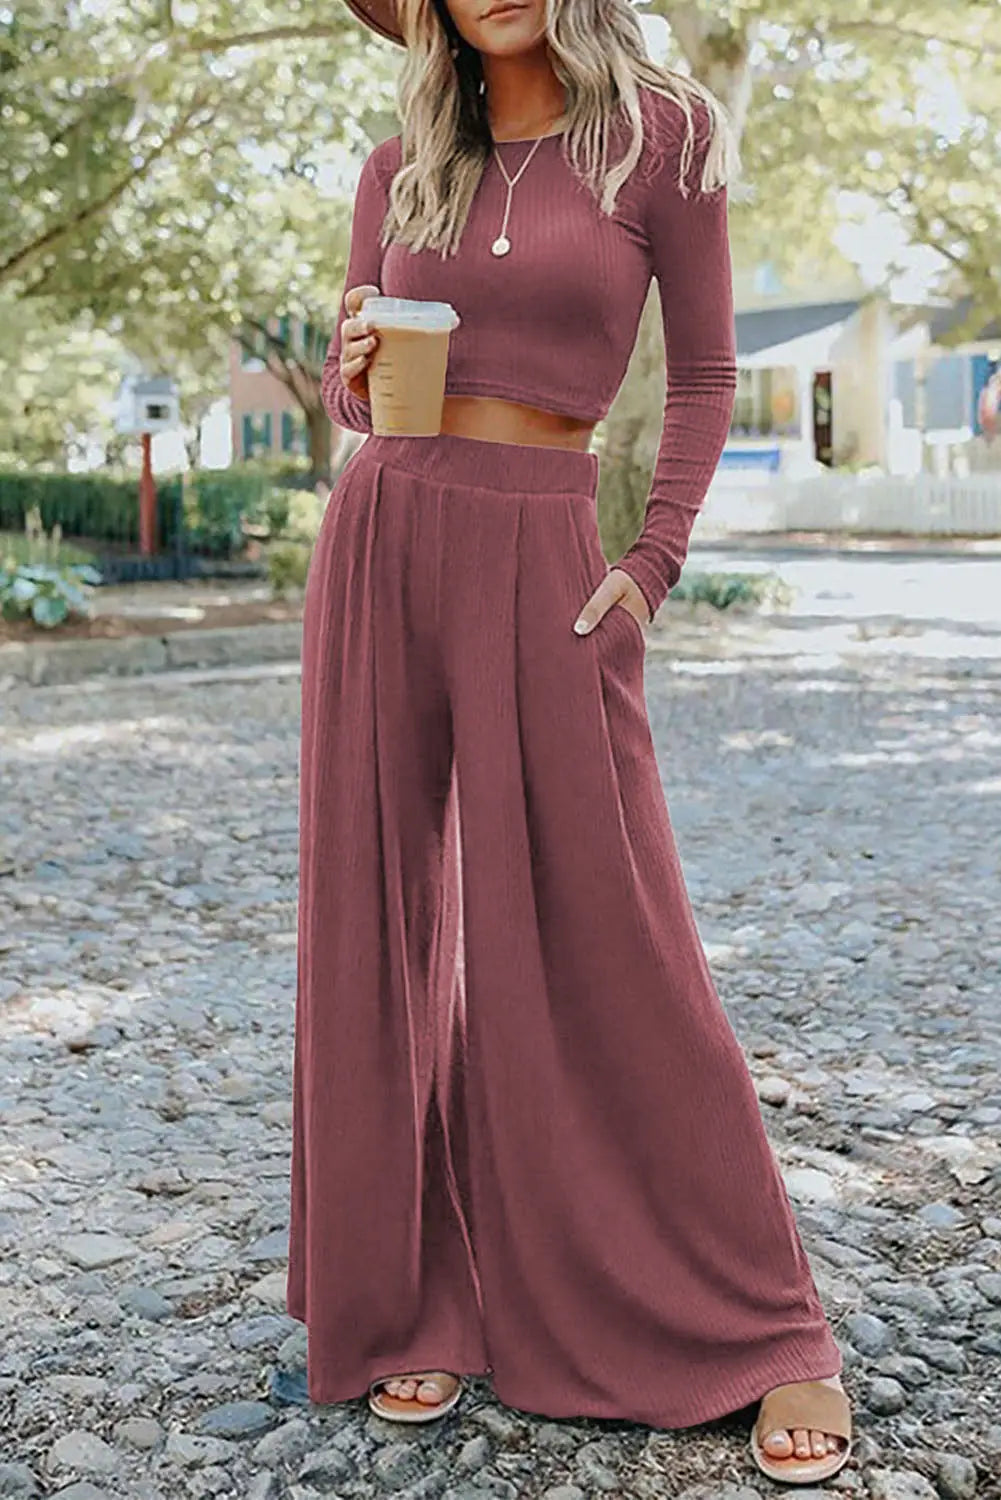 Solid color ribbed crop top long pants set - pink / s / 65% polyester + 25% viscose + 10% elastane - loungewear